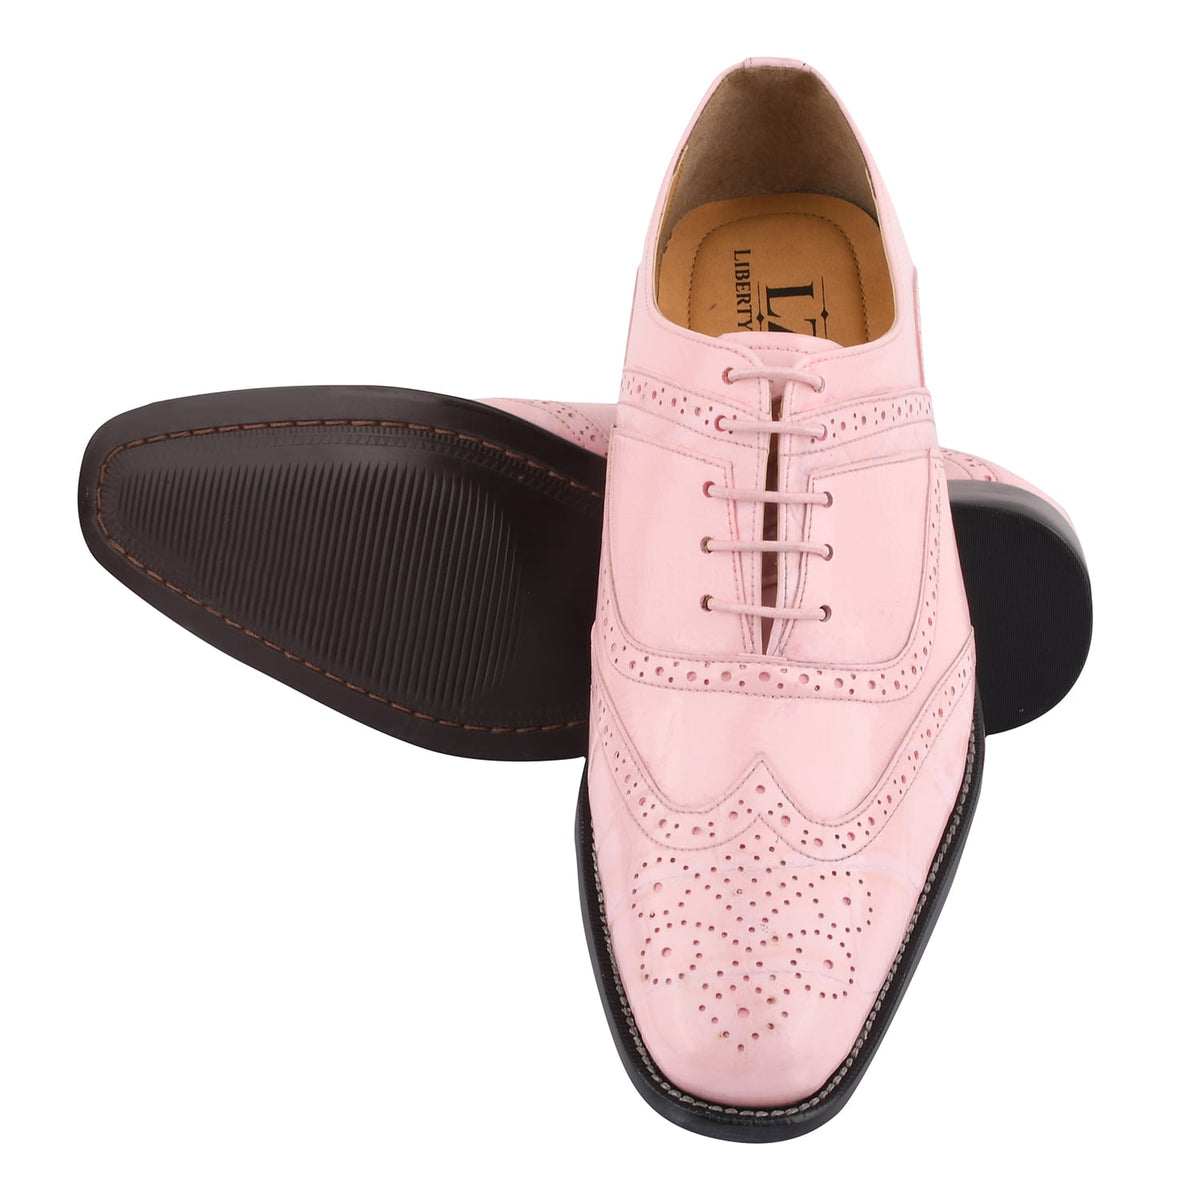 pink dress shoes